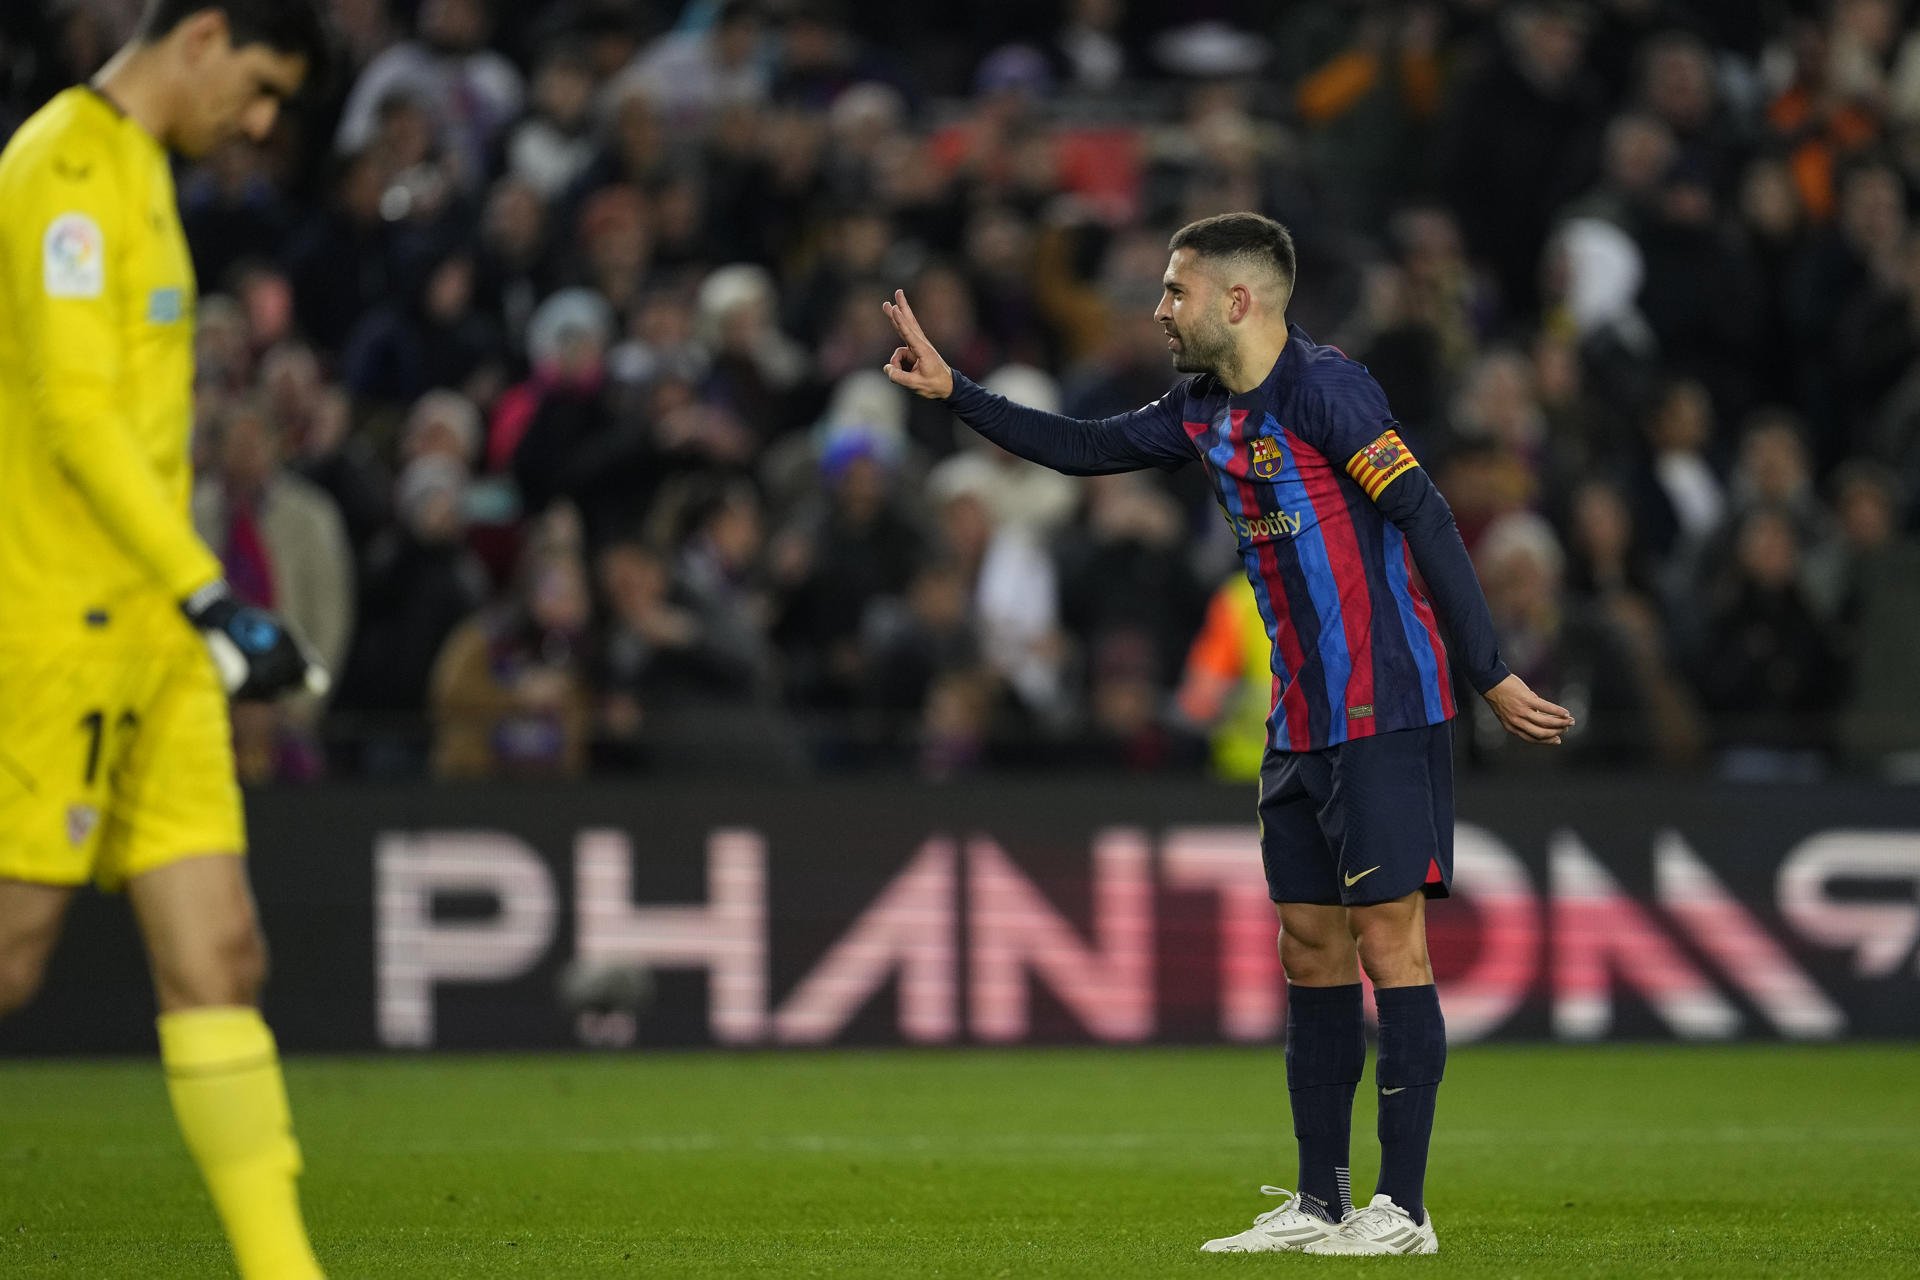 Jordi Alba, destino Madrid si no vuelve Messi: adiós, Barça